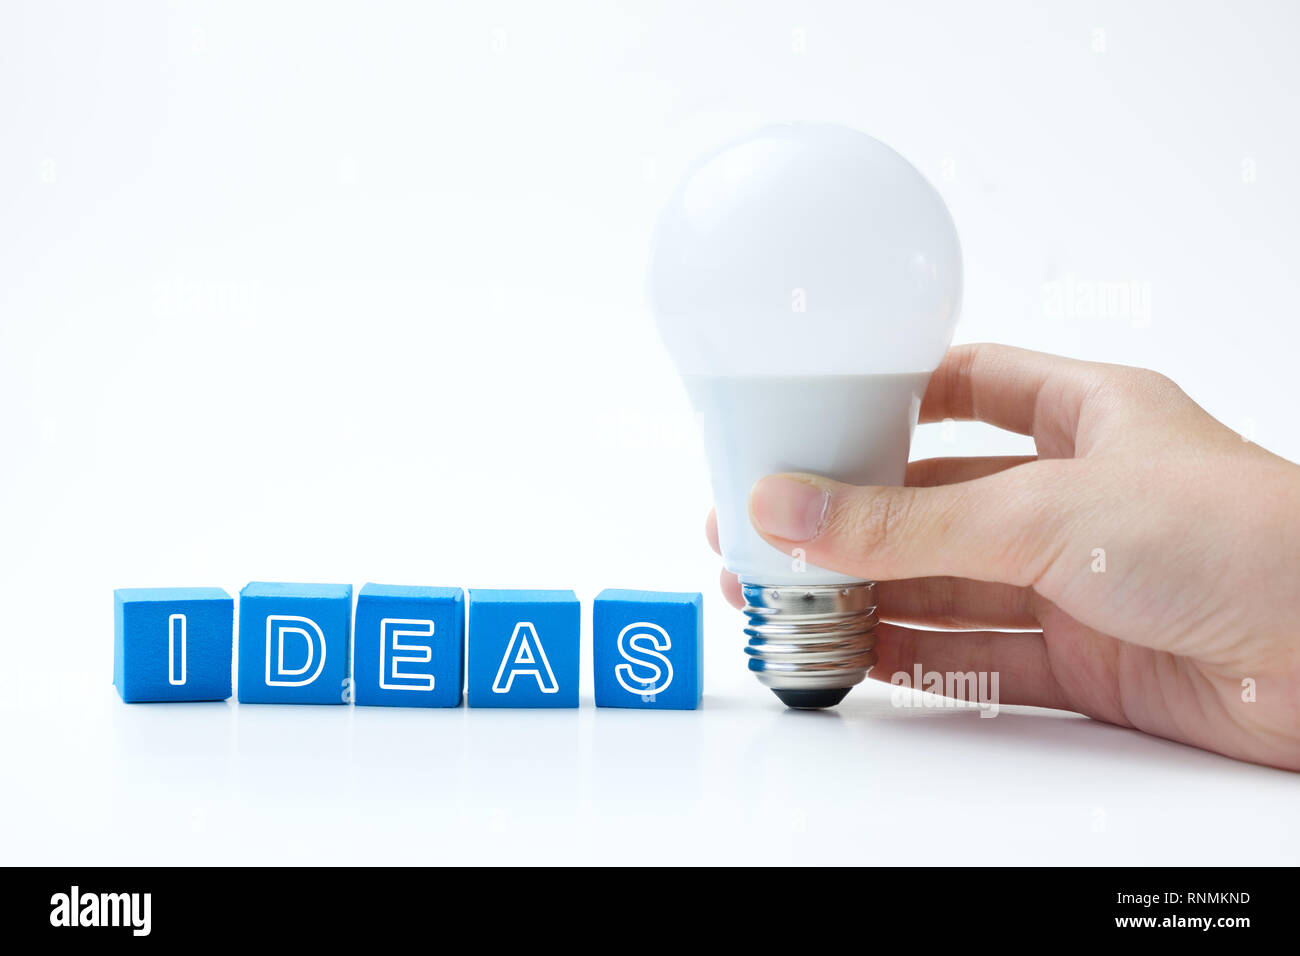 Ideas word with light bulb Stock Photo